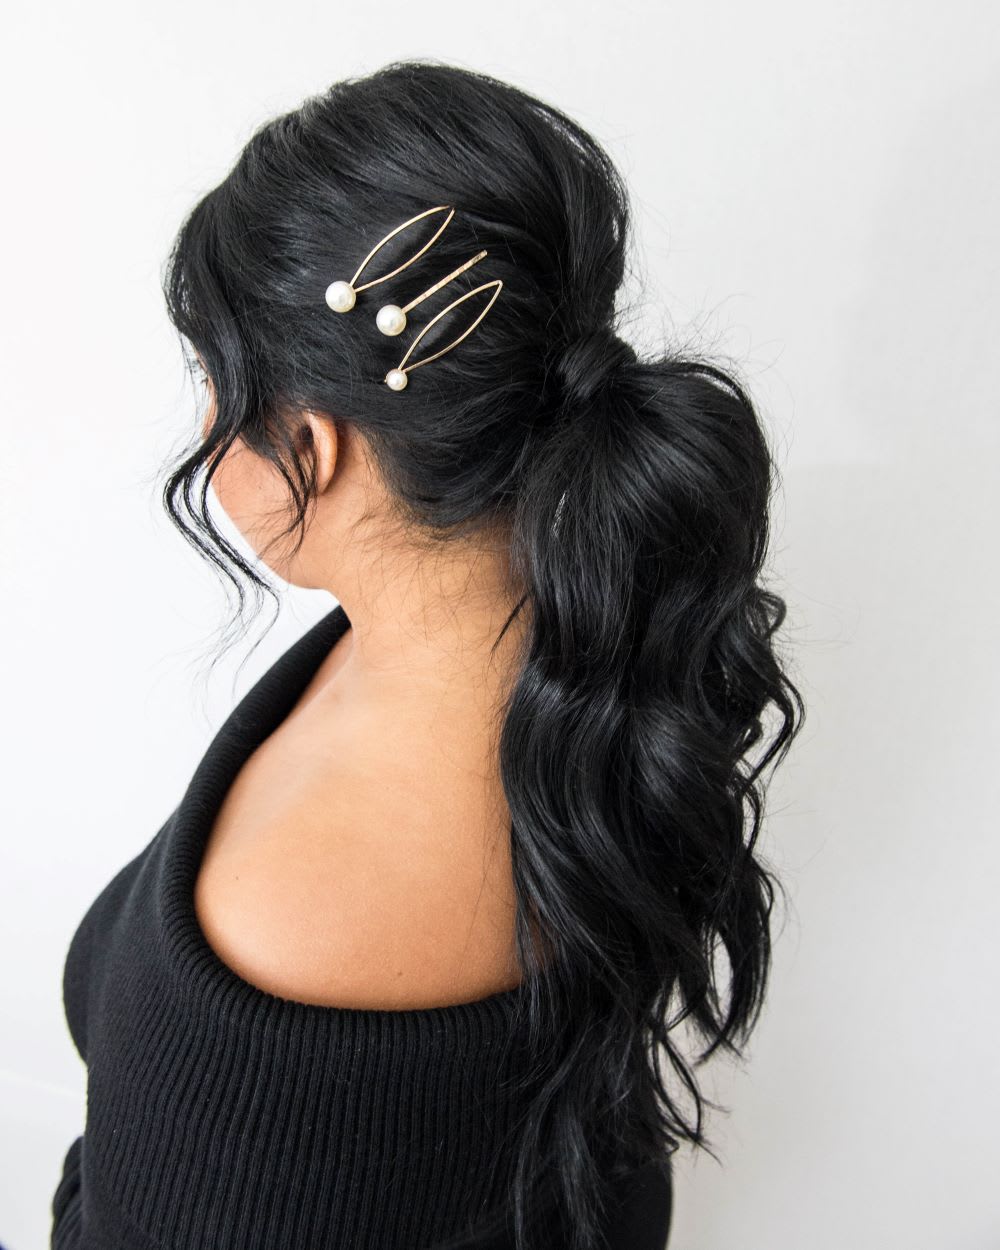 How to Wear Hair Clips: 3 Gorgeous Ideas - Lulus.com Fashion Blog